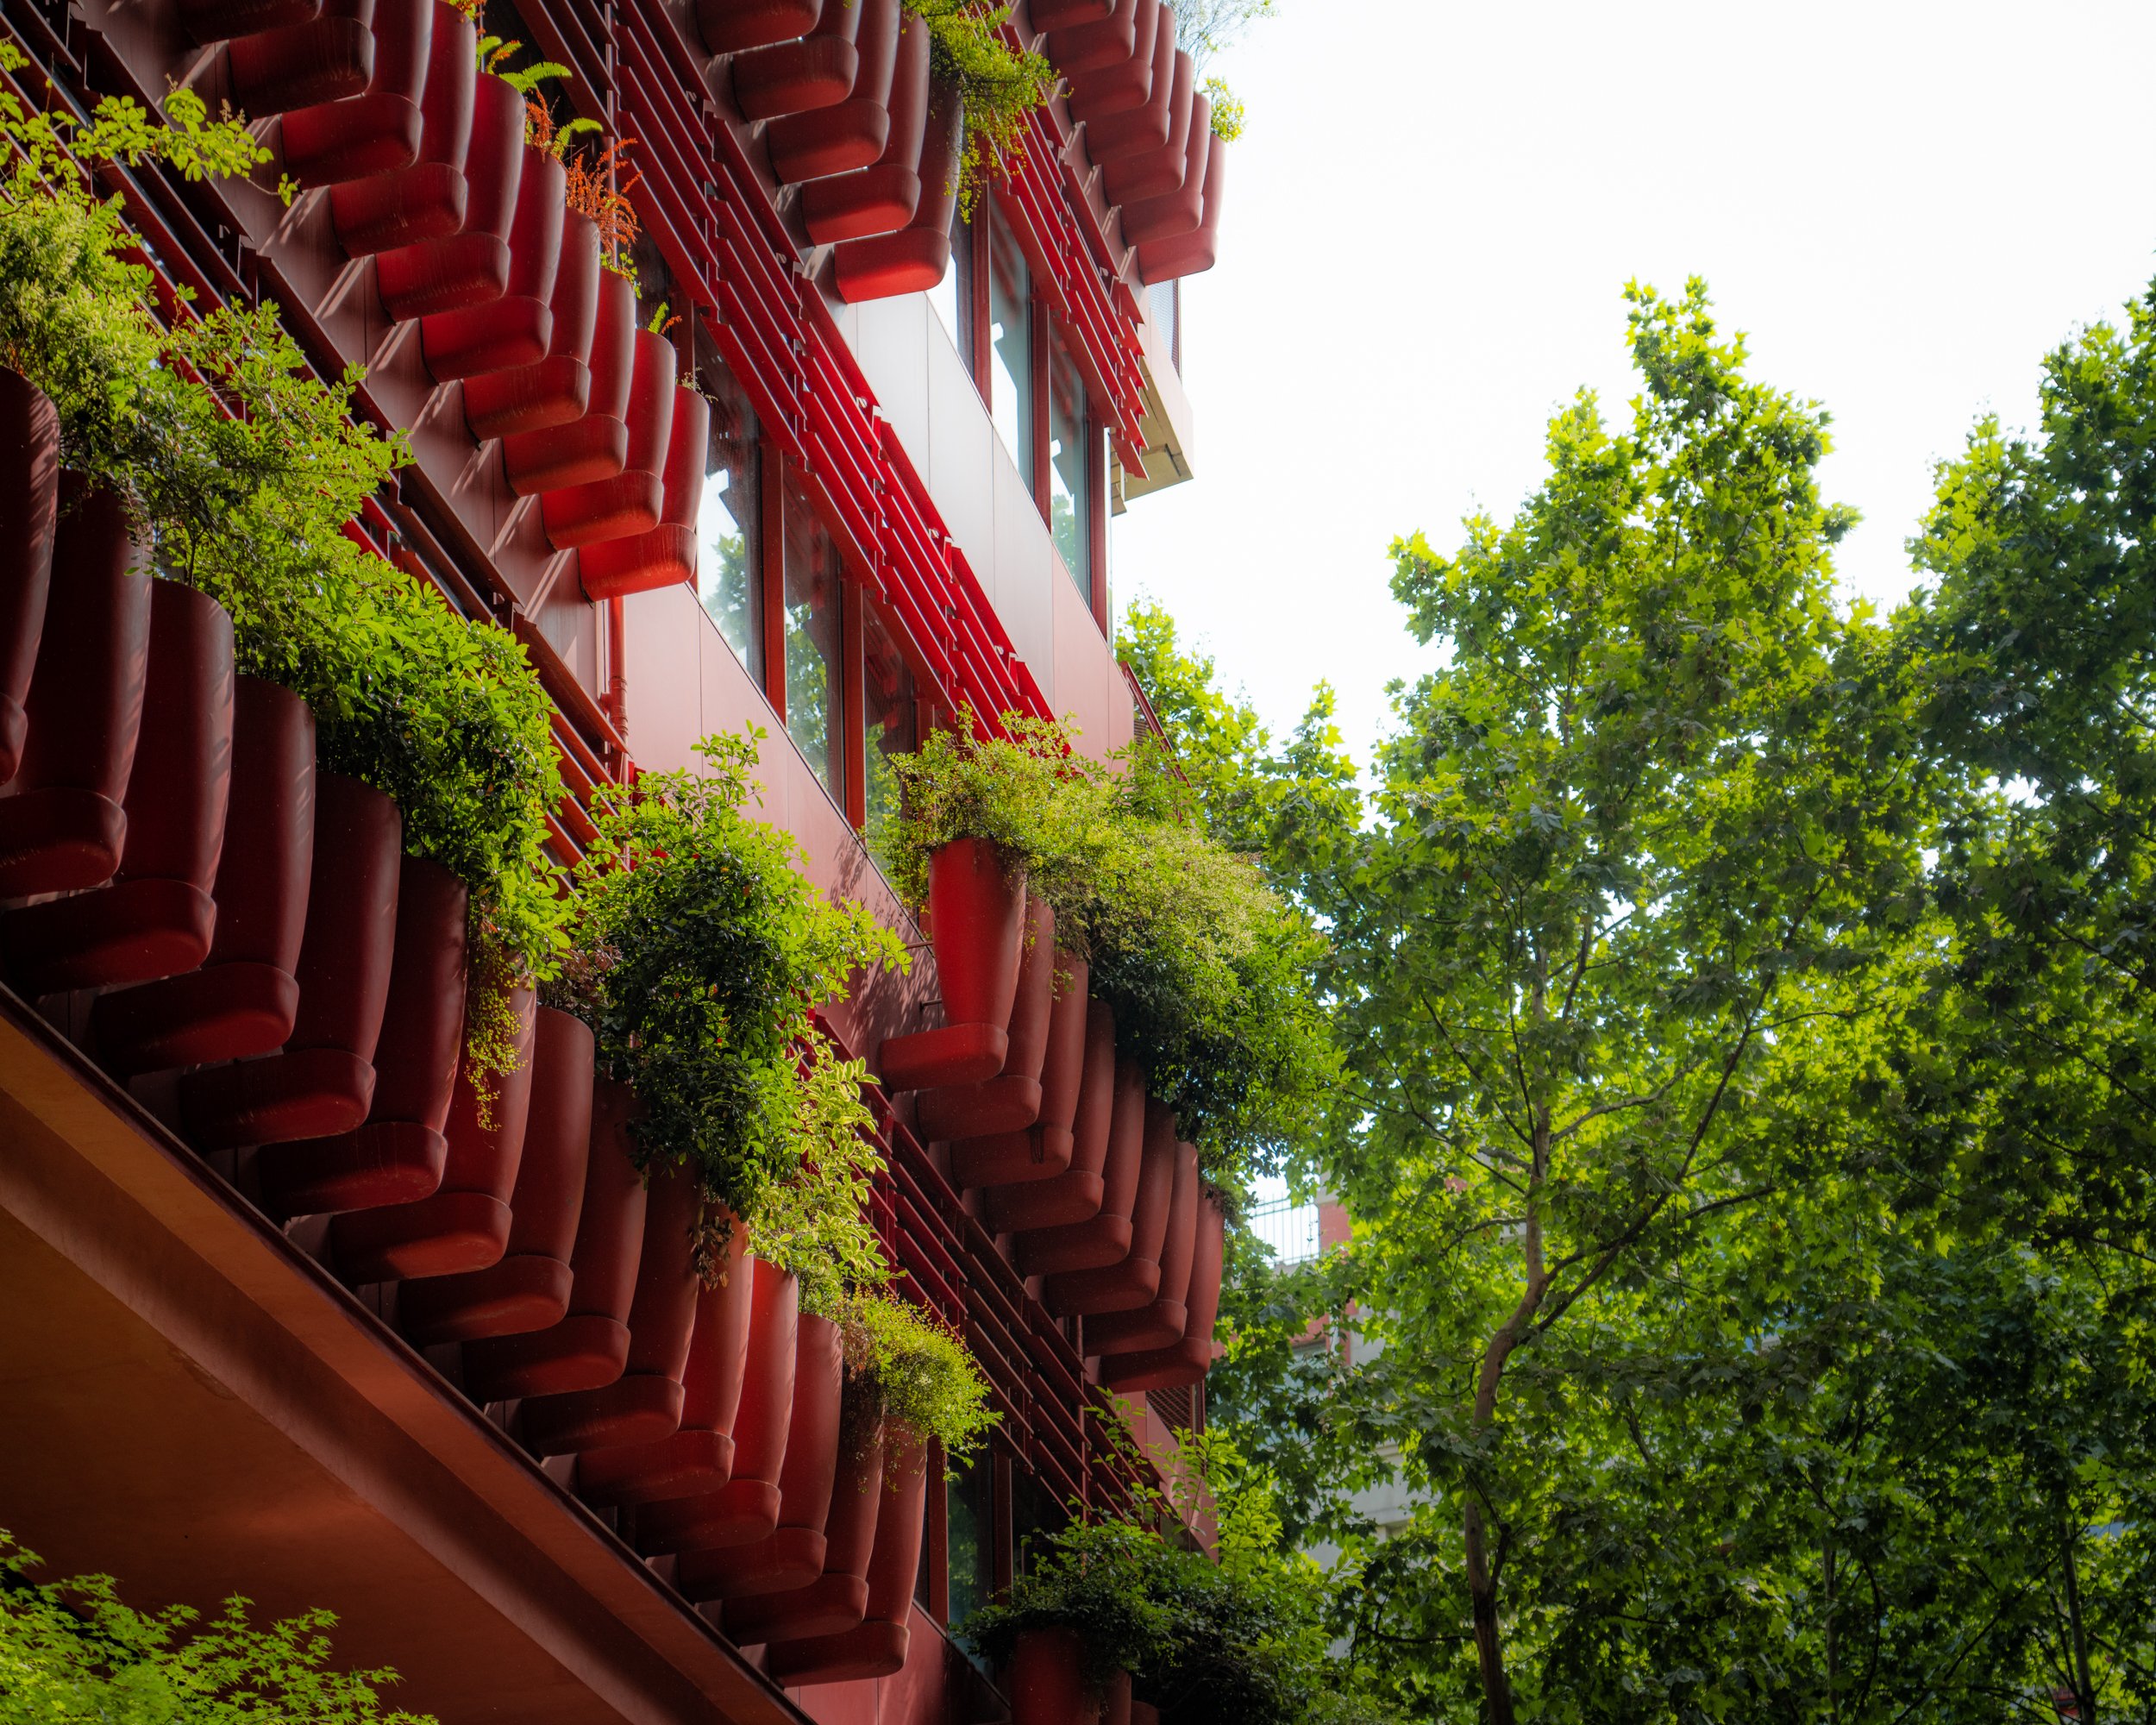  Henderson Cifi Tiandi - The Roof  Design by Ateliers Jean Nouvel Landscape Design by Aspect Studios  Shanghai  